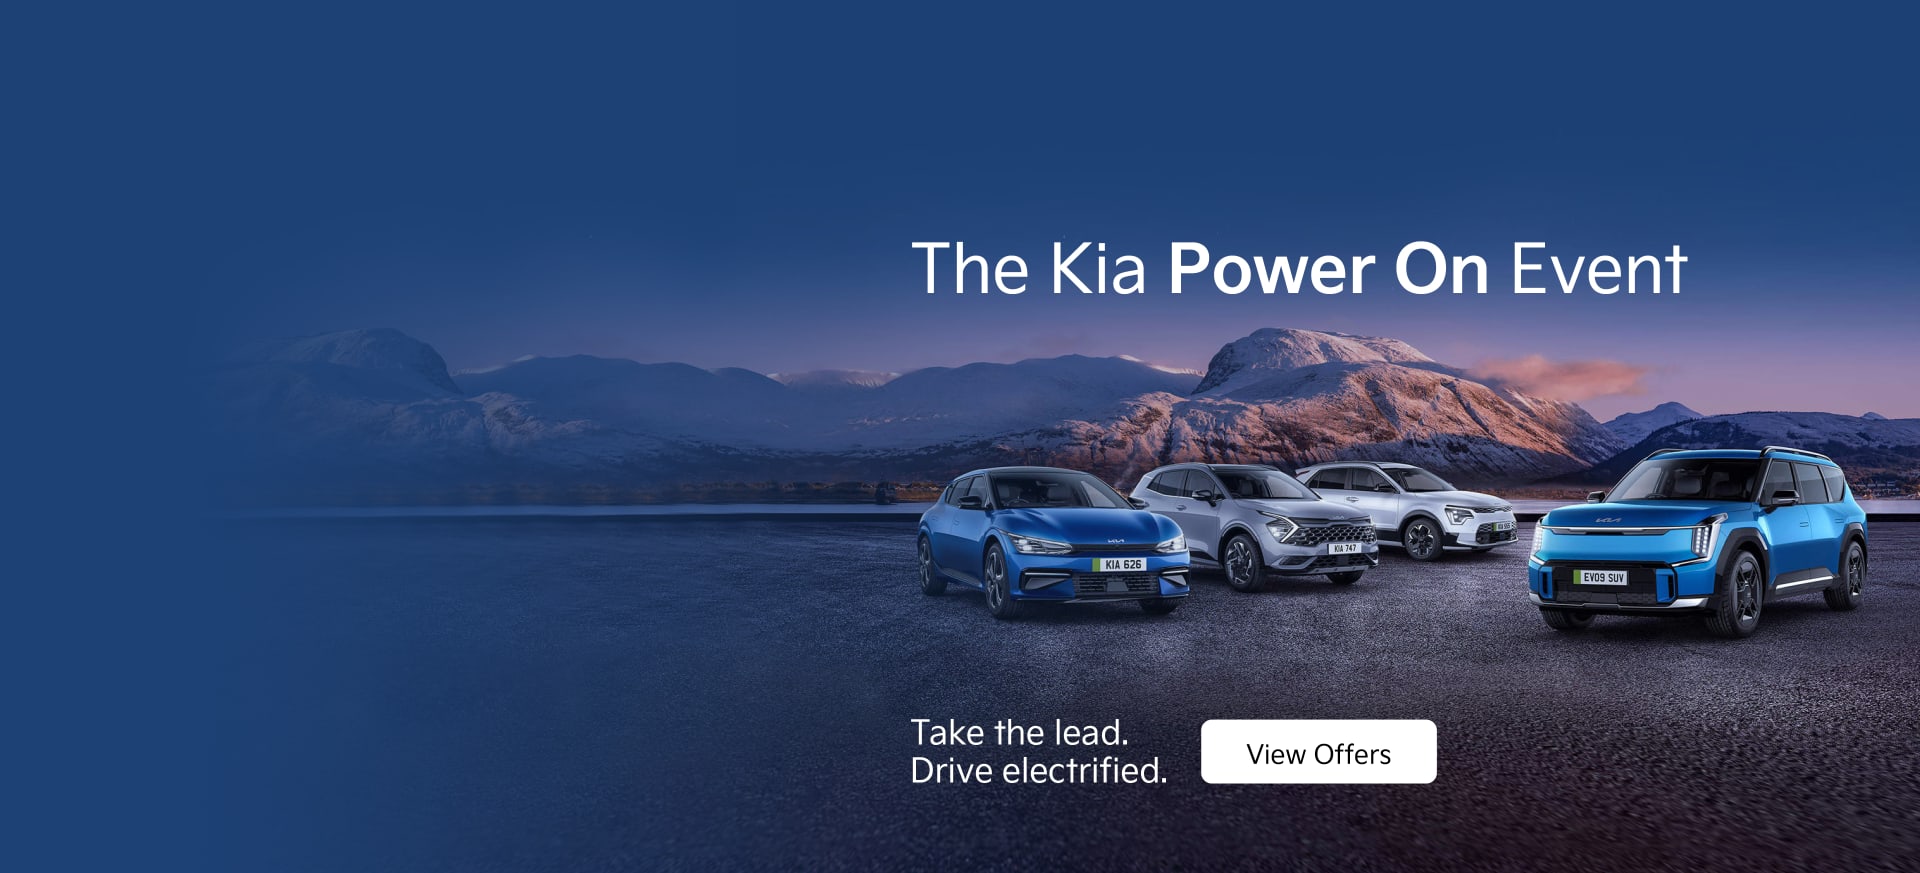 The Kia Power On Event 